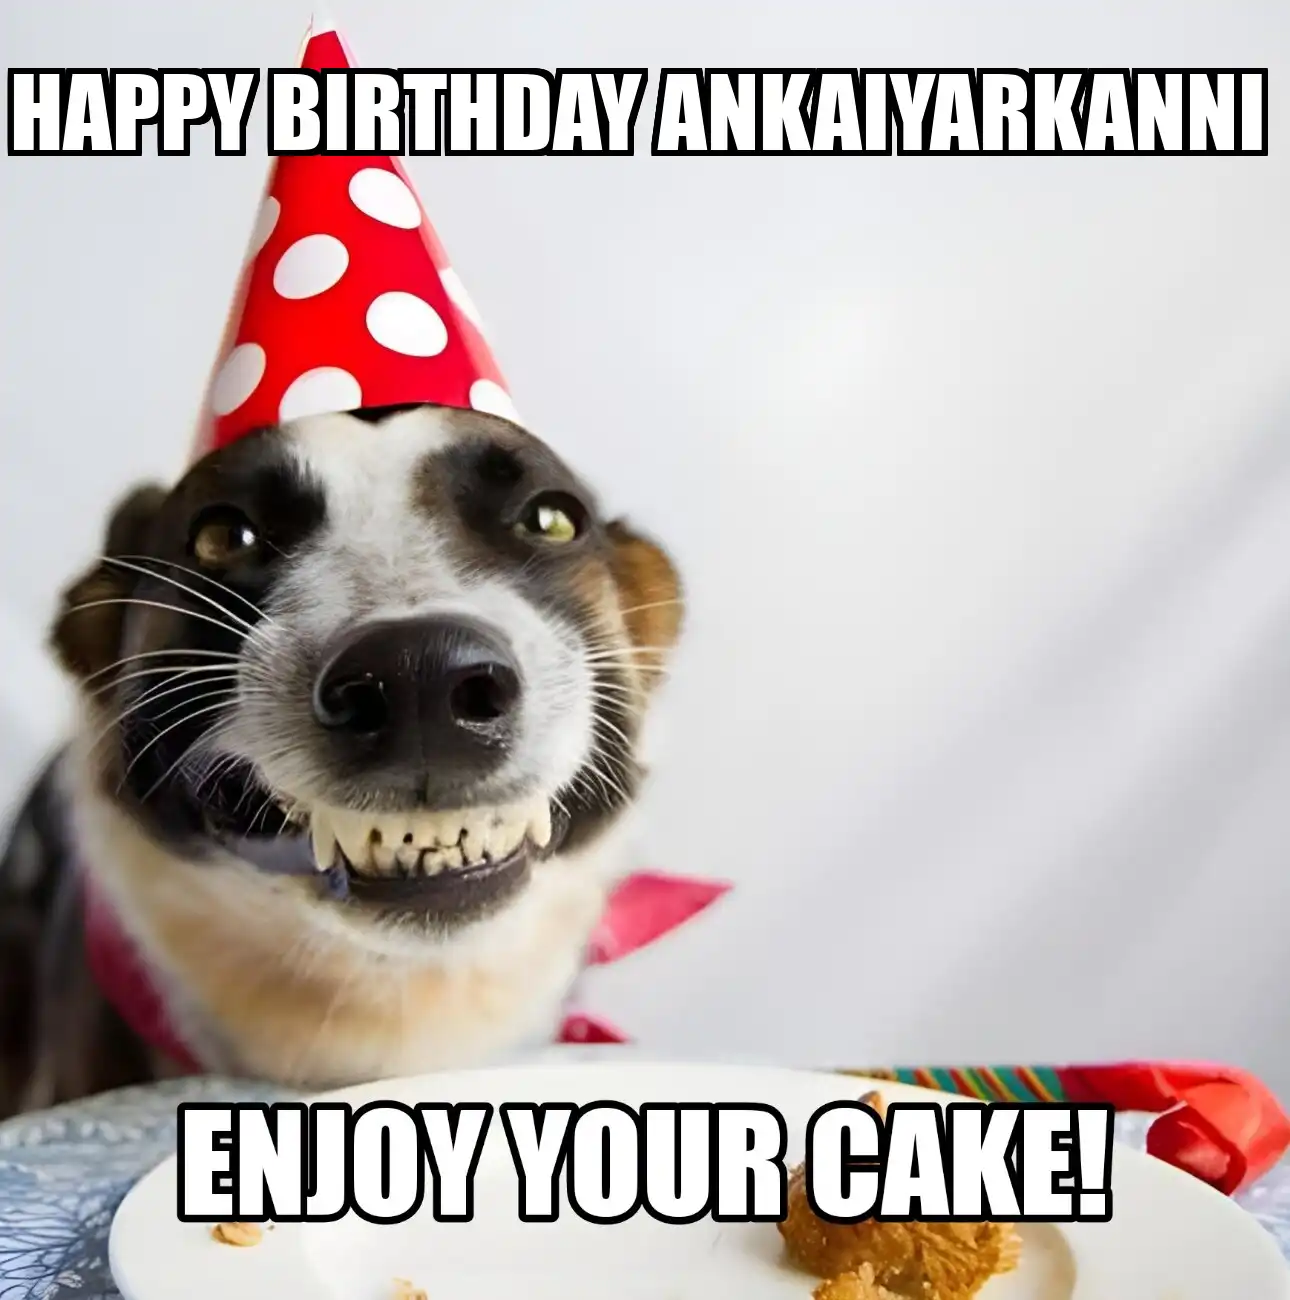 Happy Birthday Ankaiyarkanni Enjoy Your Cake Dog Meme